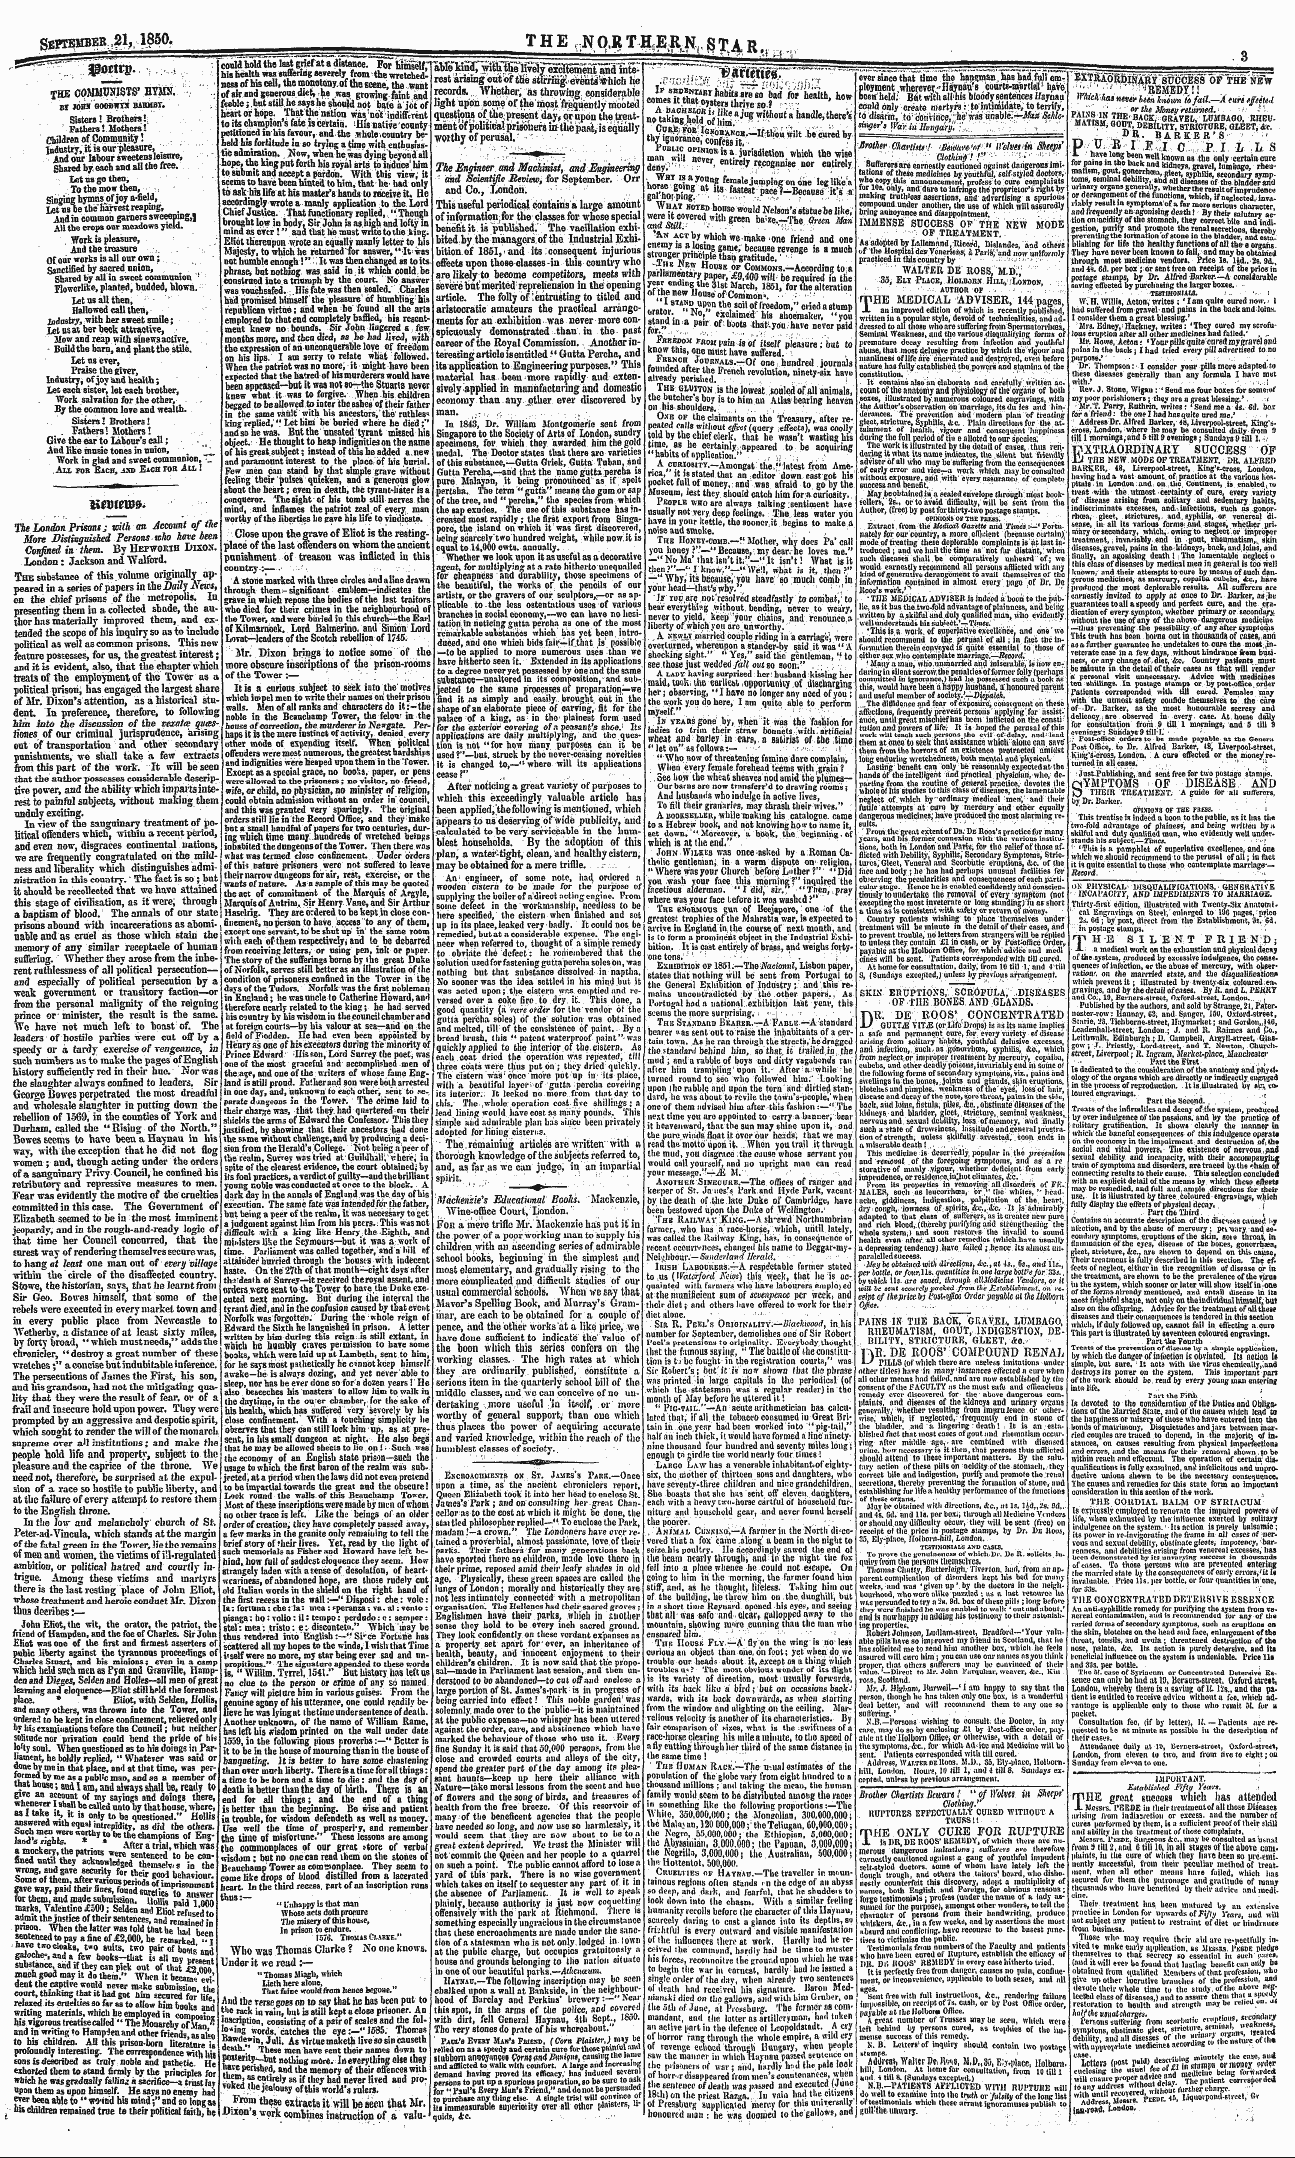 Northern Star (1837-1852): jS F Y, 3rd edition - Ad00315